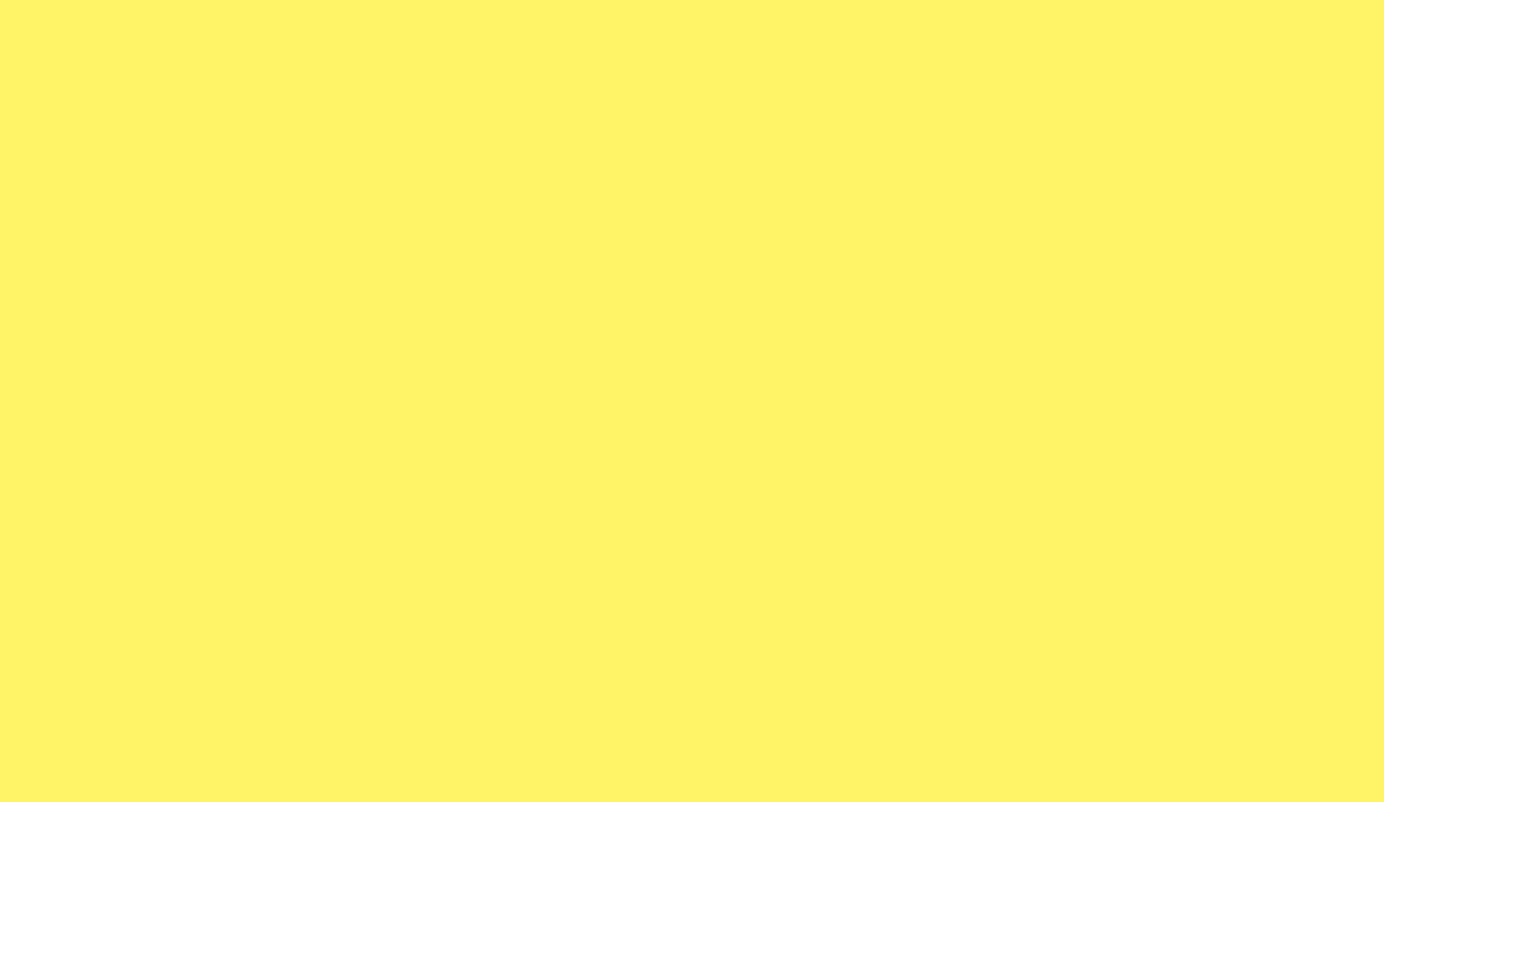 Name My Desktop Yellow Background Jpg S Size Kb Id